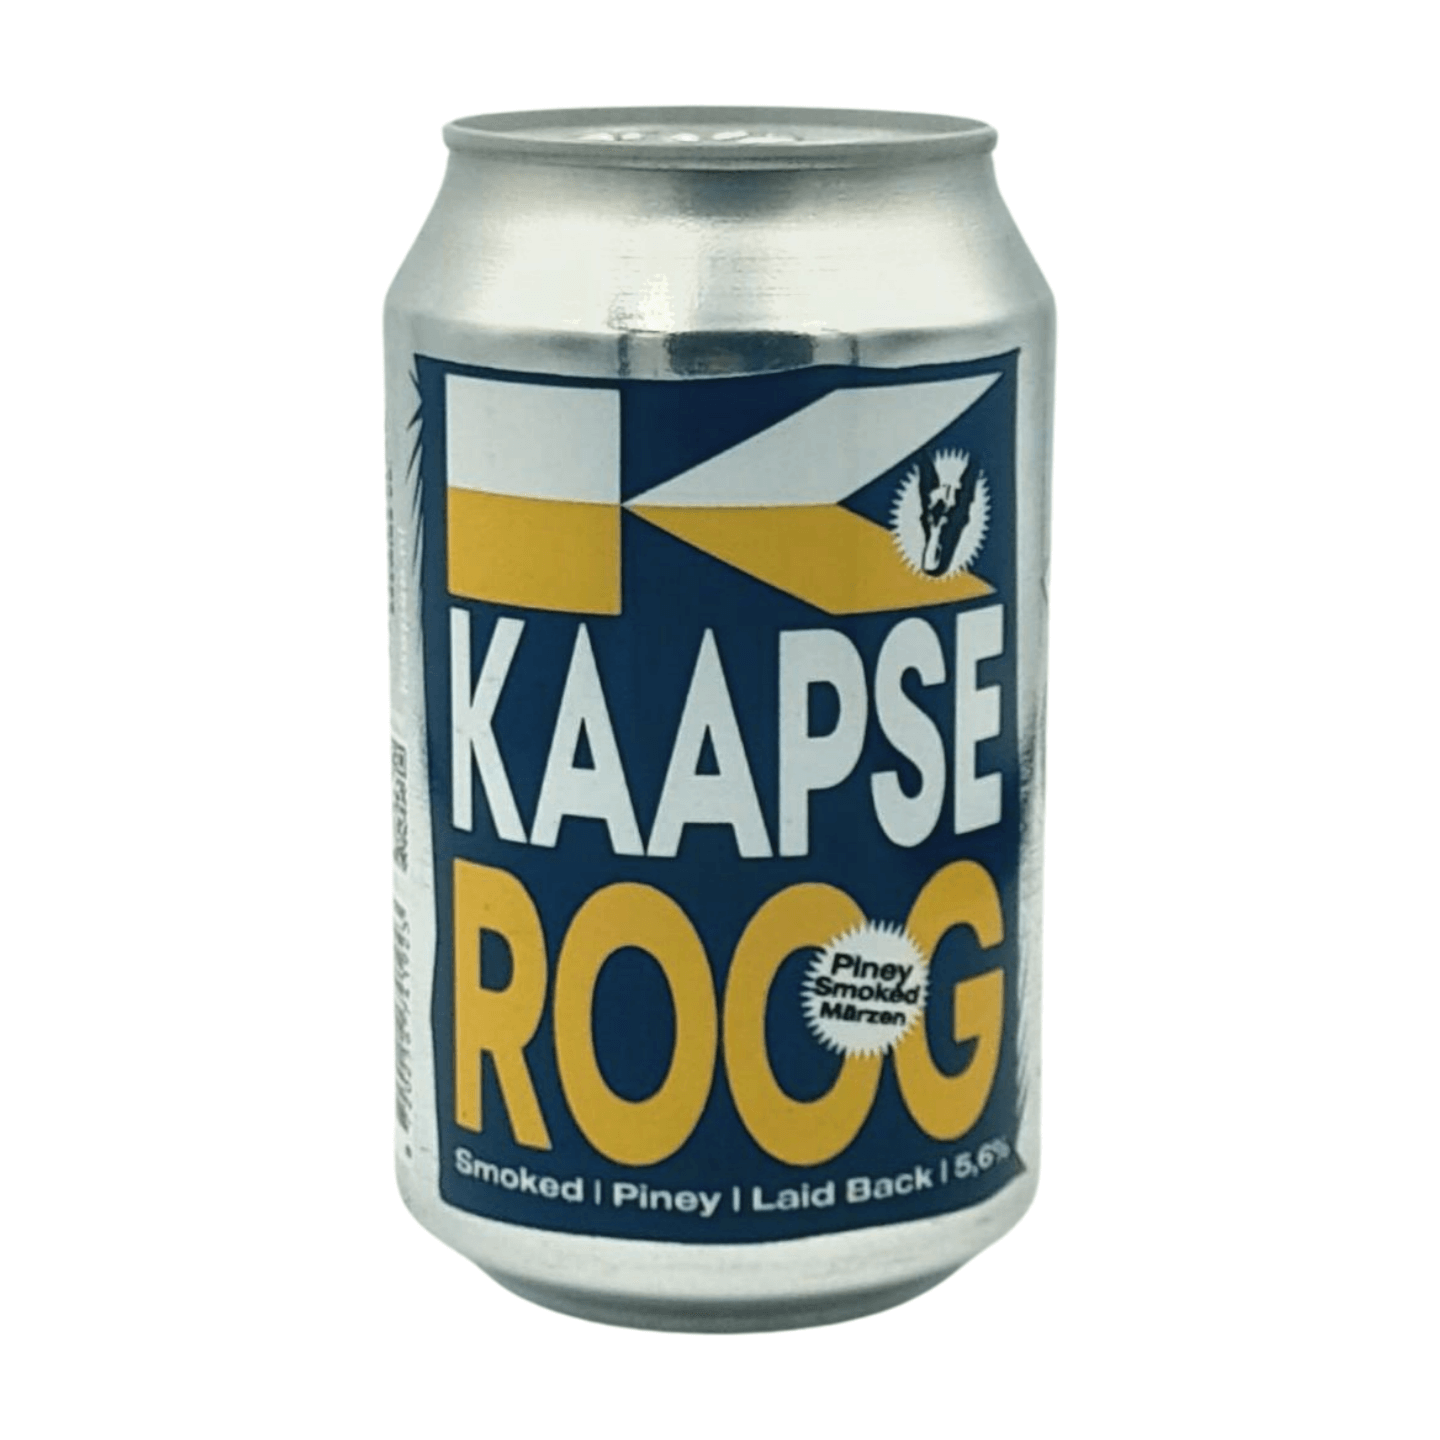 Kaapse Brouwers Roog | Märzen Webshop Online Verdins Bierwinkel Rotterdam